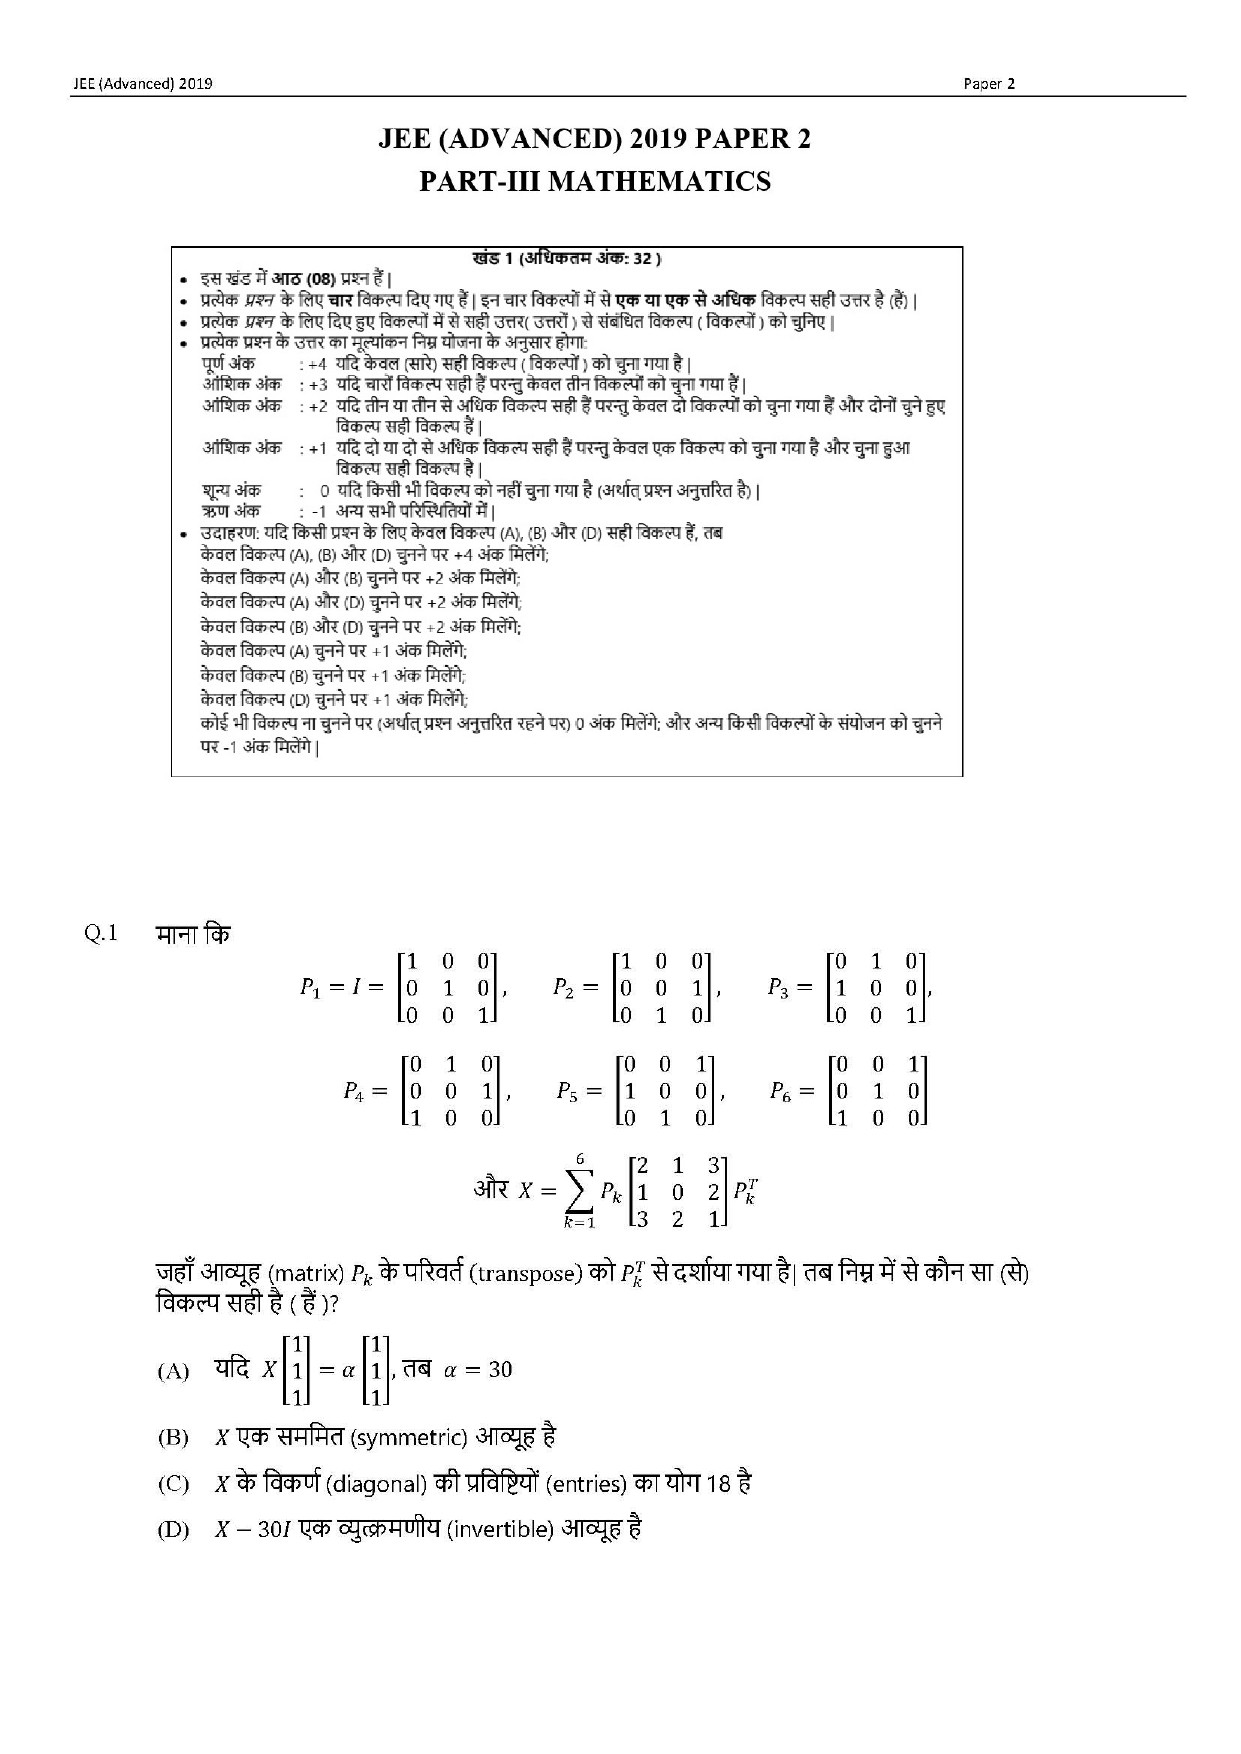 JEE Advanced Hindi Question Paper 2019 Paper 2 Mathematics 1